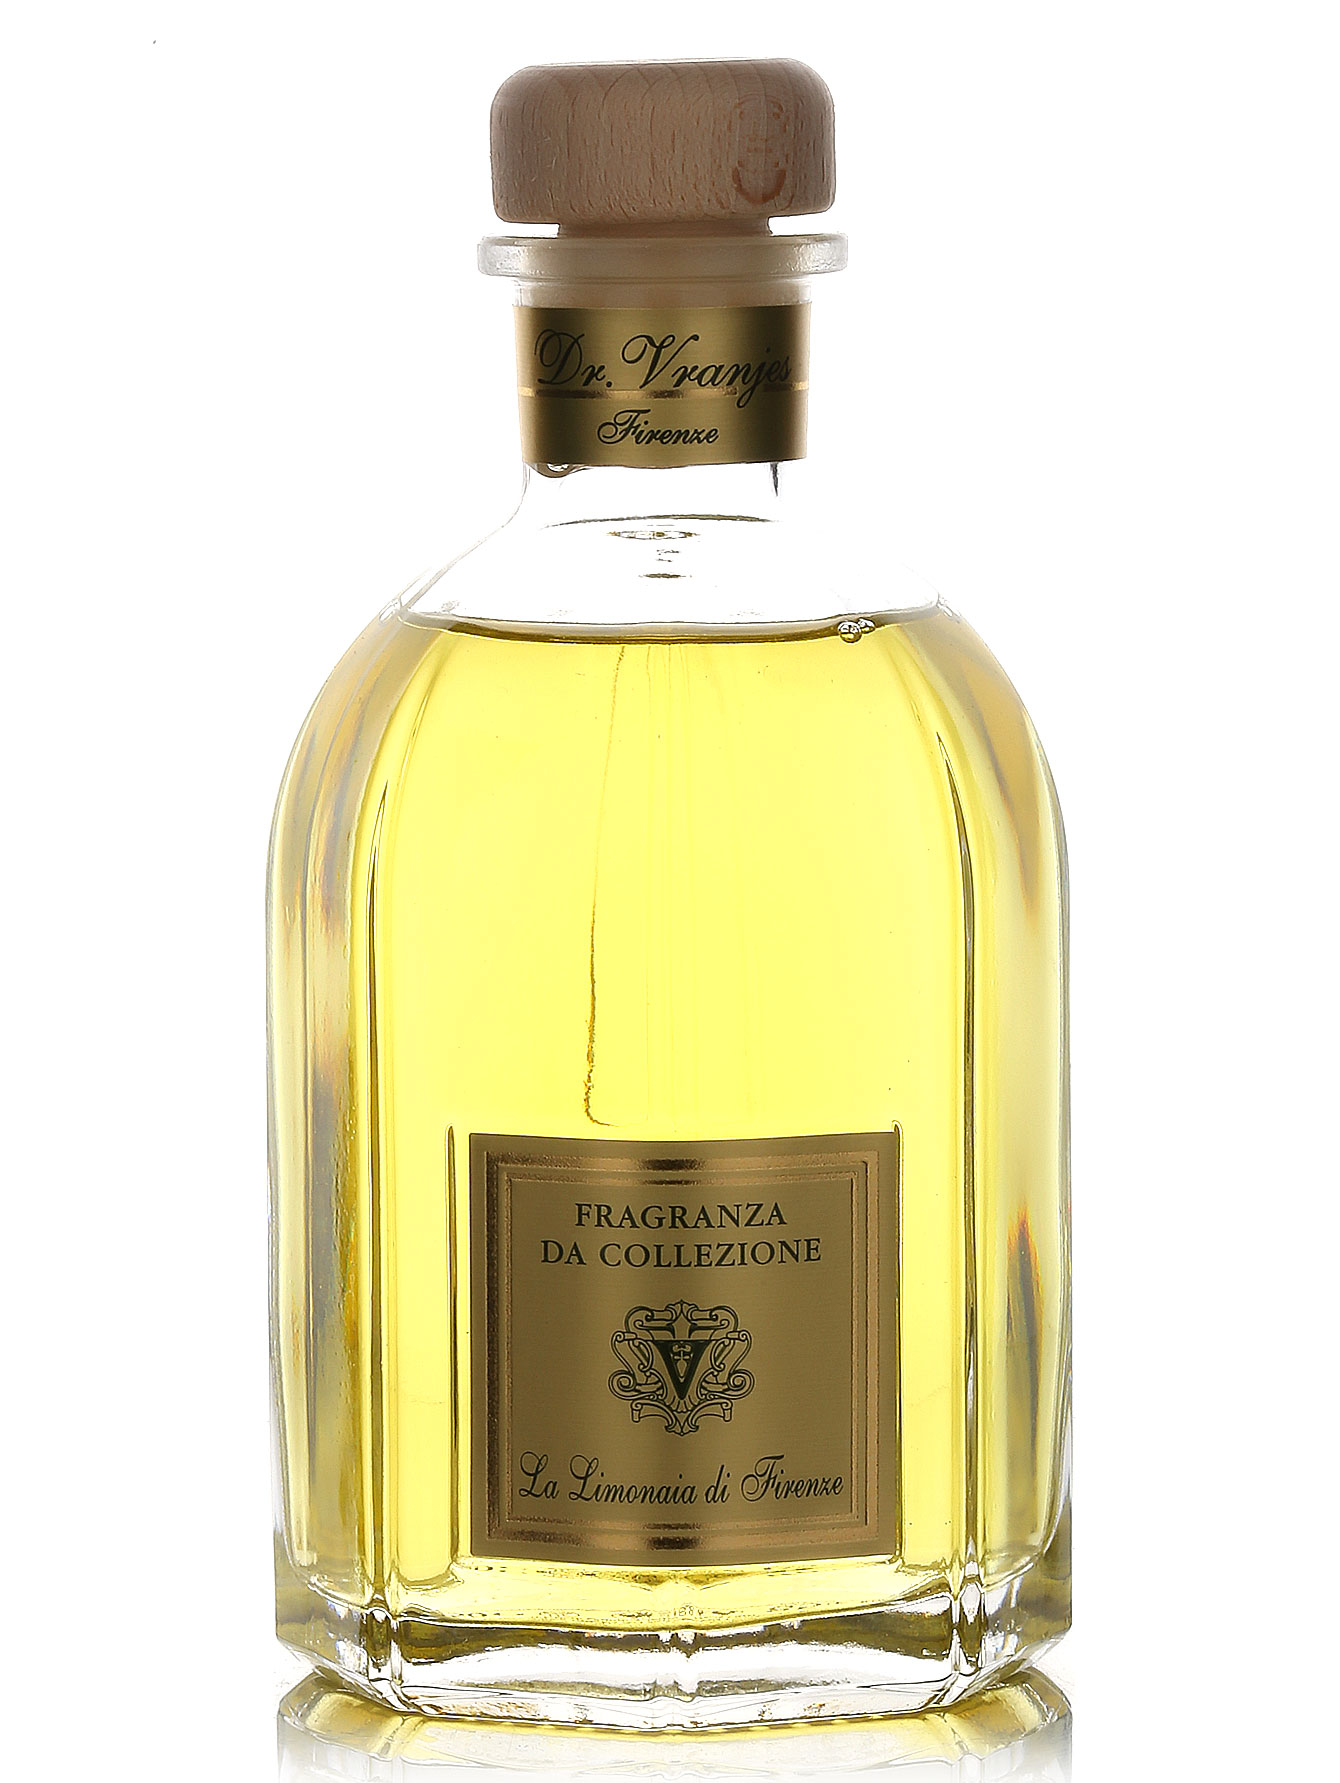 Ароматизатор воздуха la Limonaia di Firenze - Home Fragrance, 250ml - Общий вид